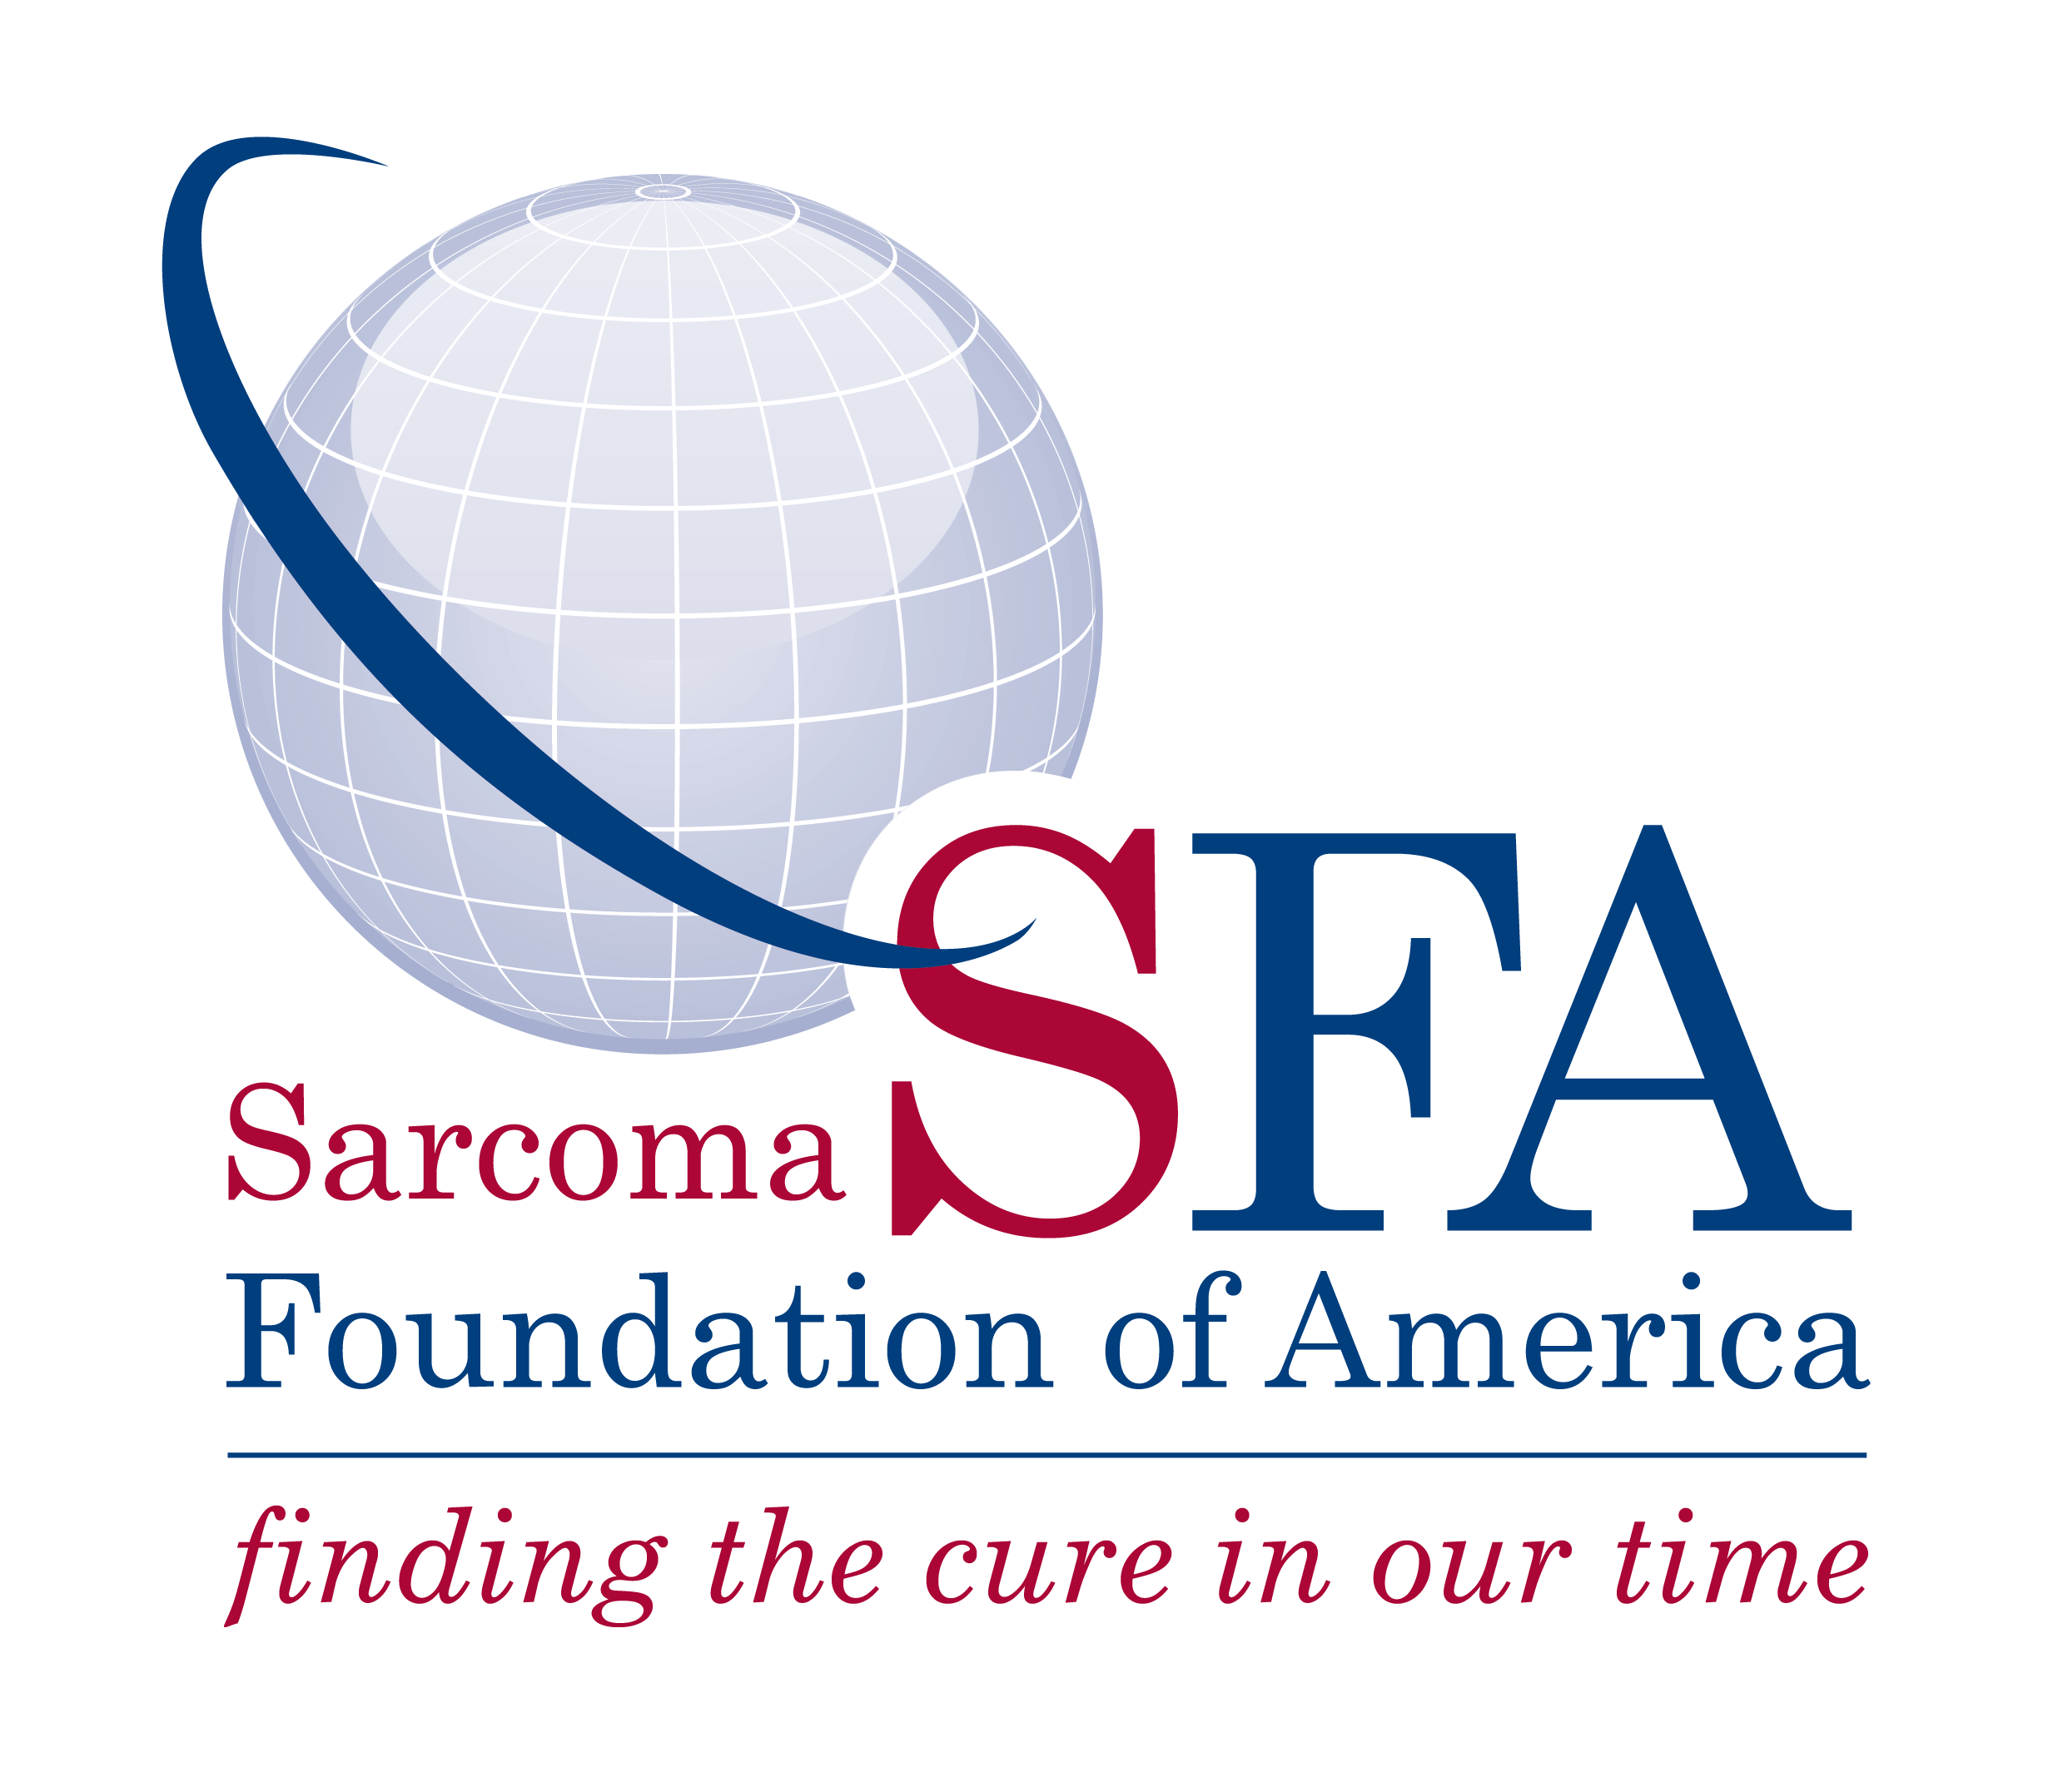 Sarcoma Foundation of America - Celebrating 20 Years - Est. 2000